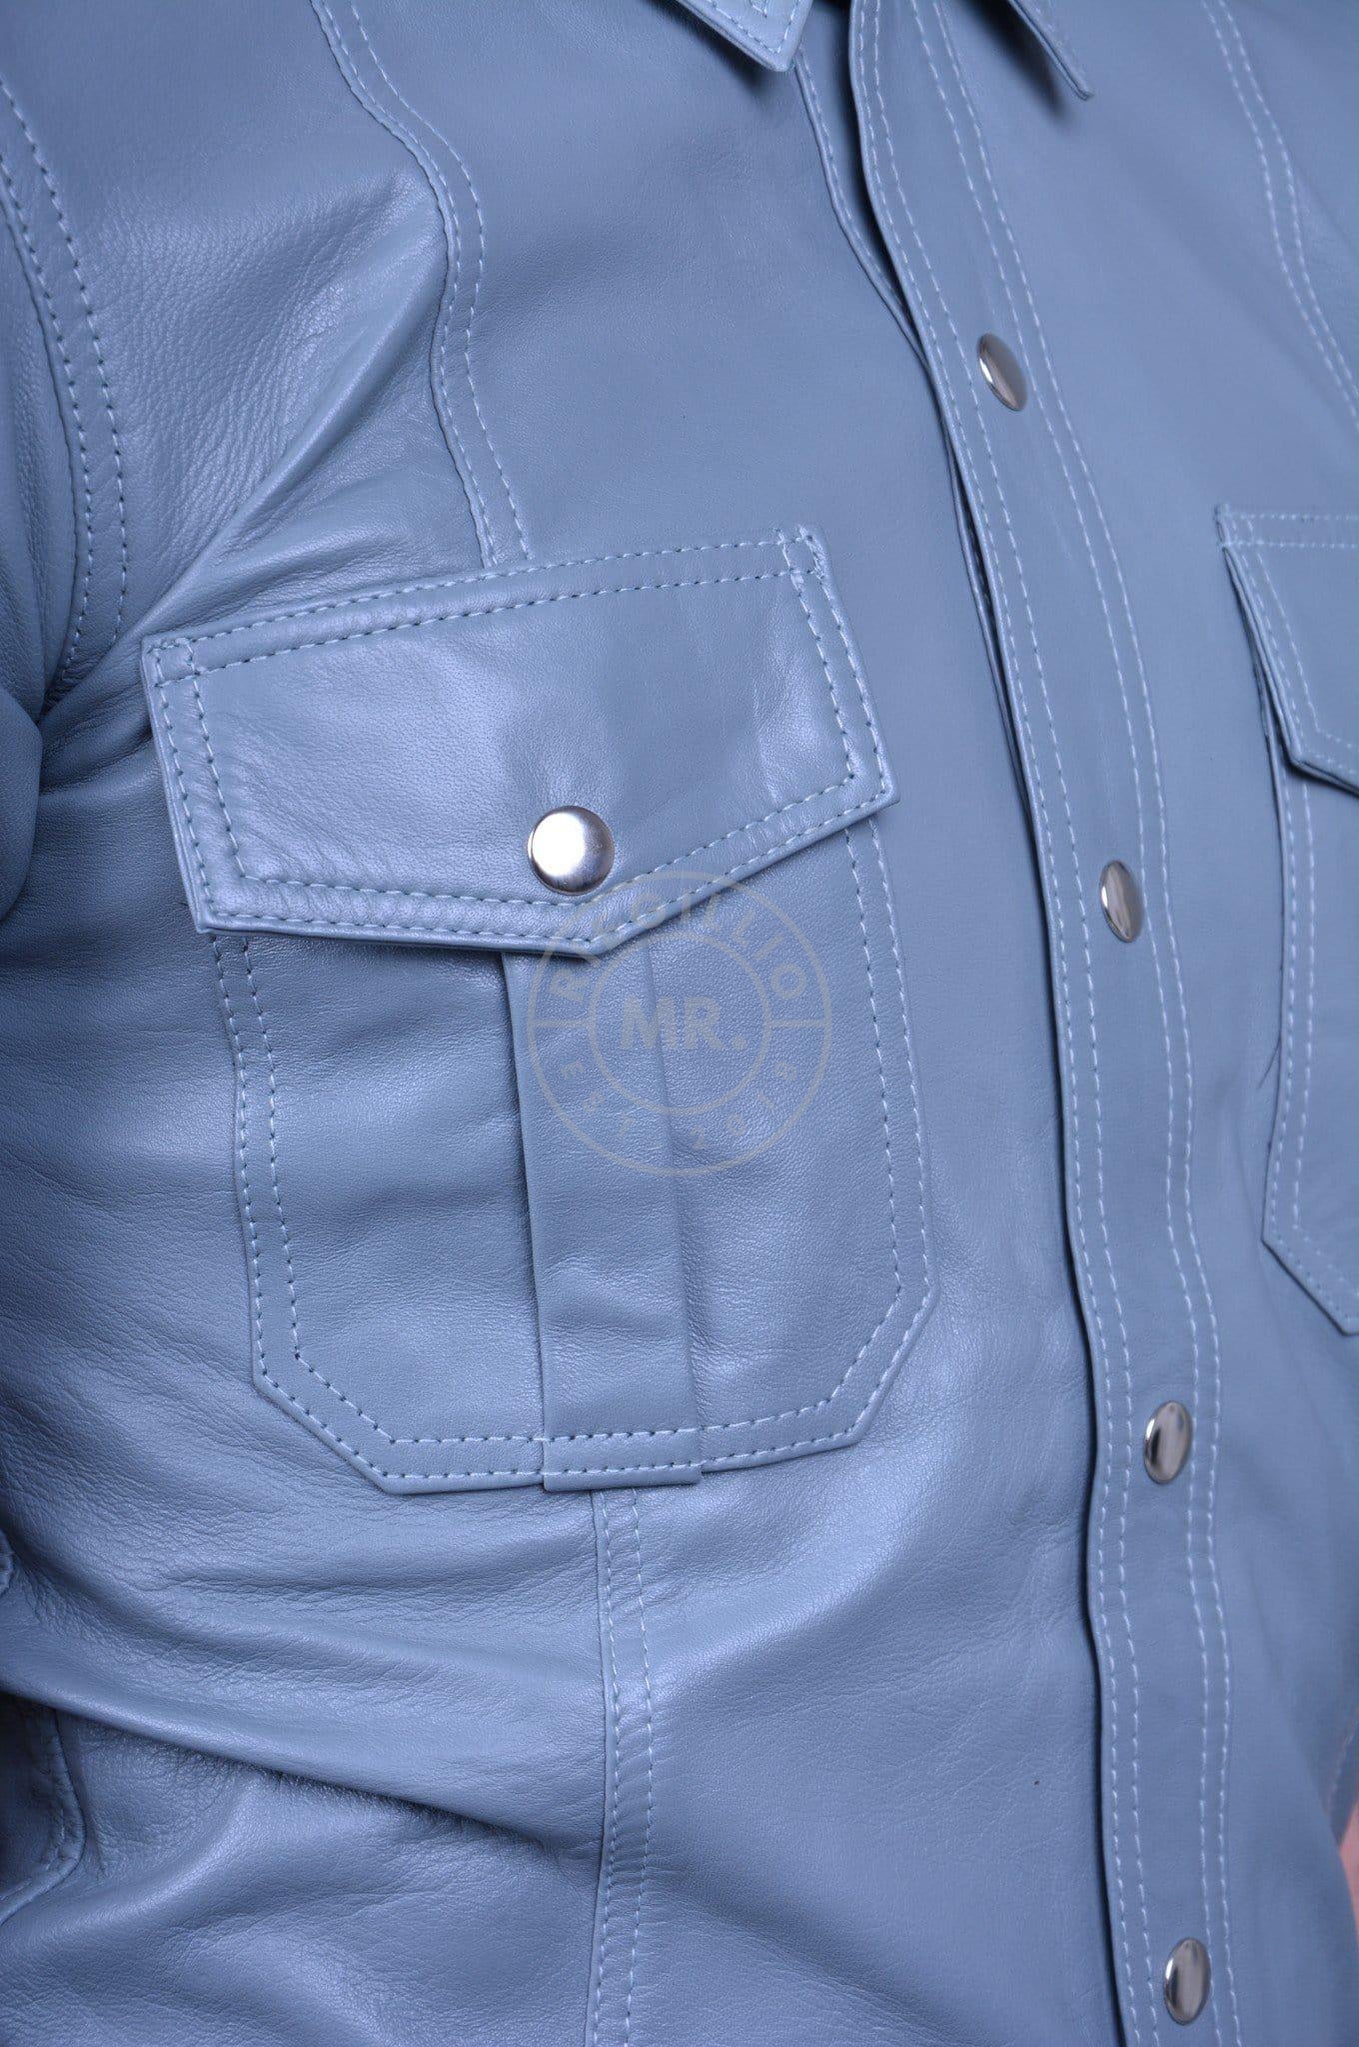 Slate Grey Leather Shirt-at MR. Riegillio